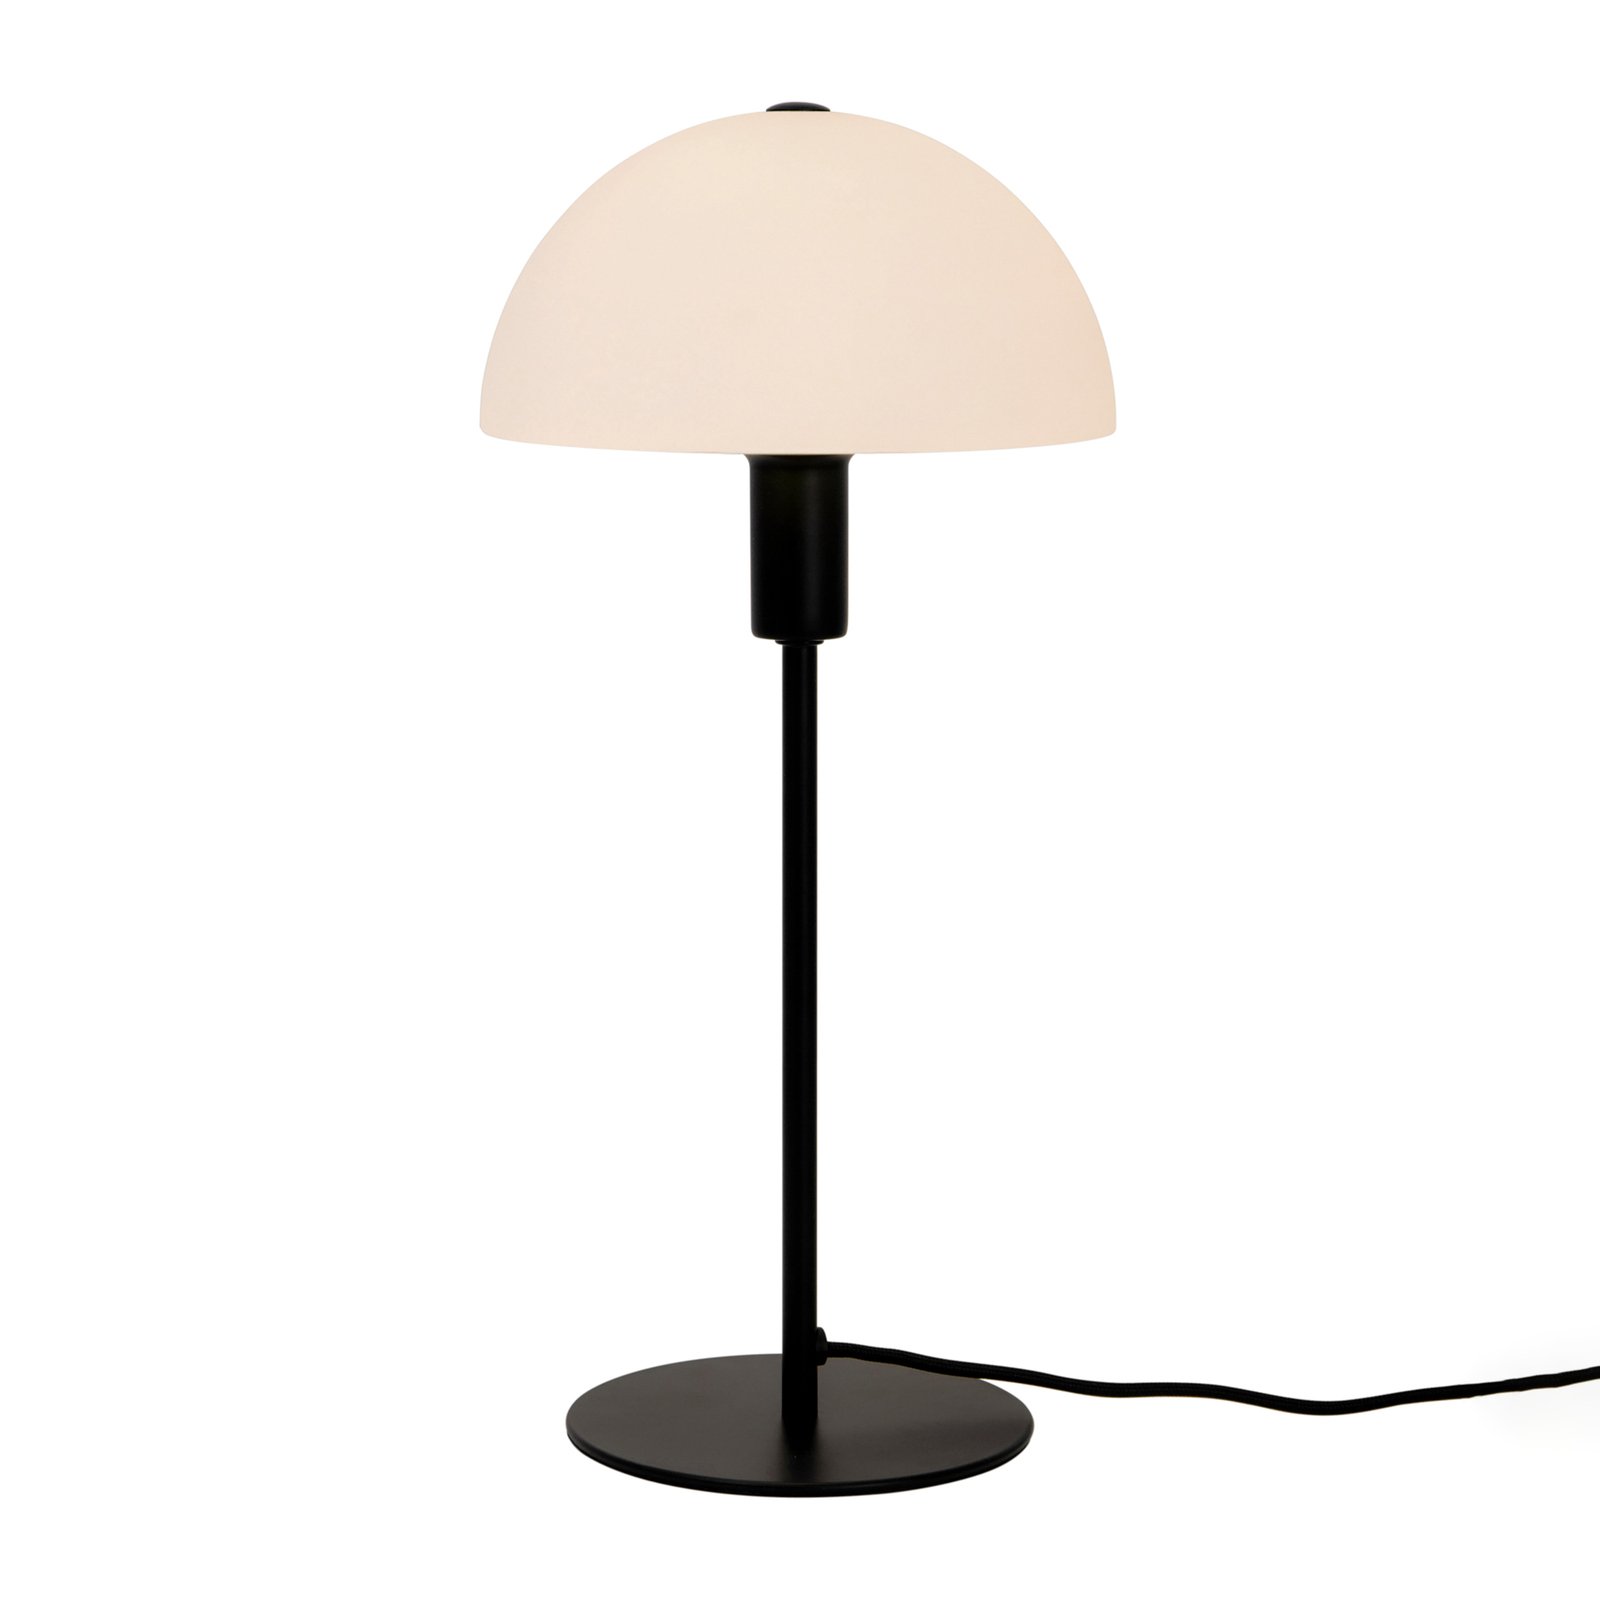 Ellen bordlampe med glasskærm, sort